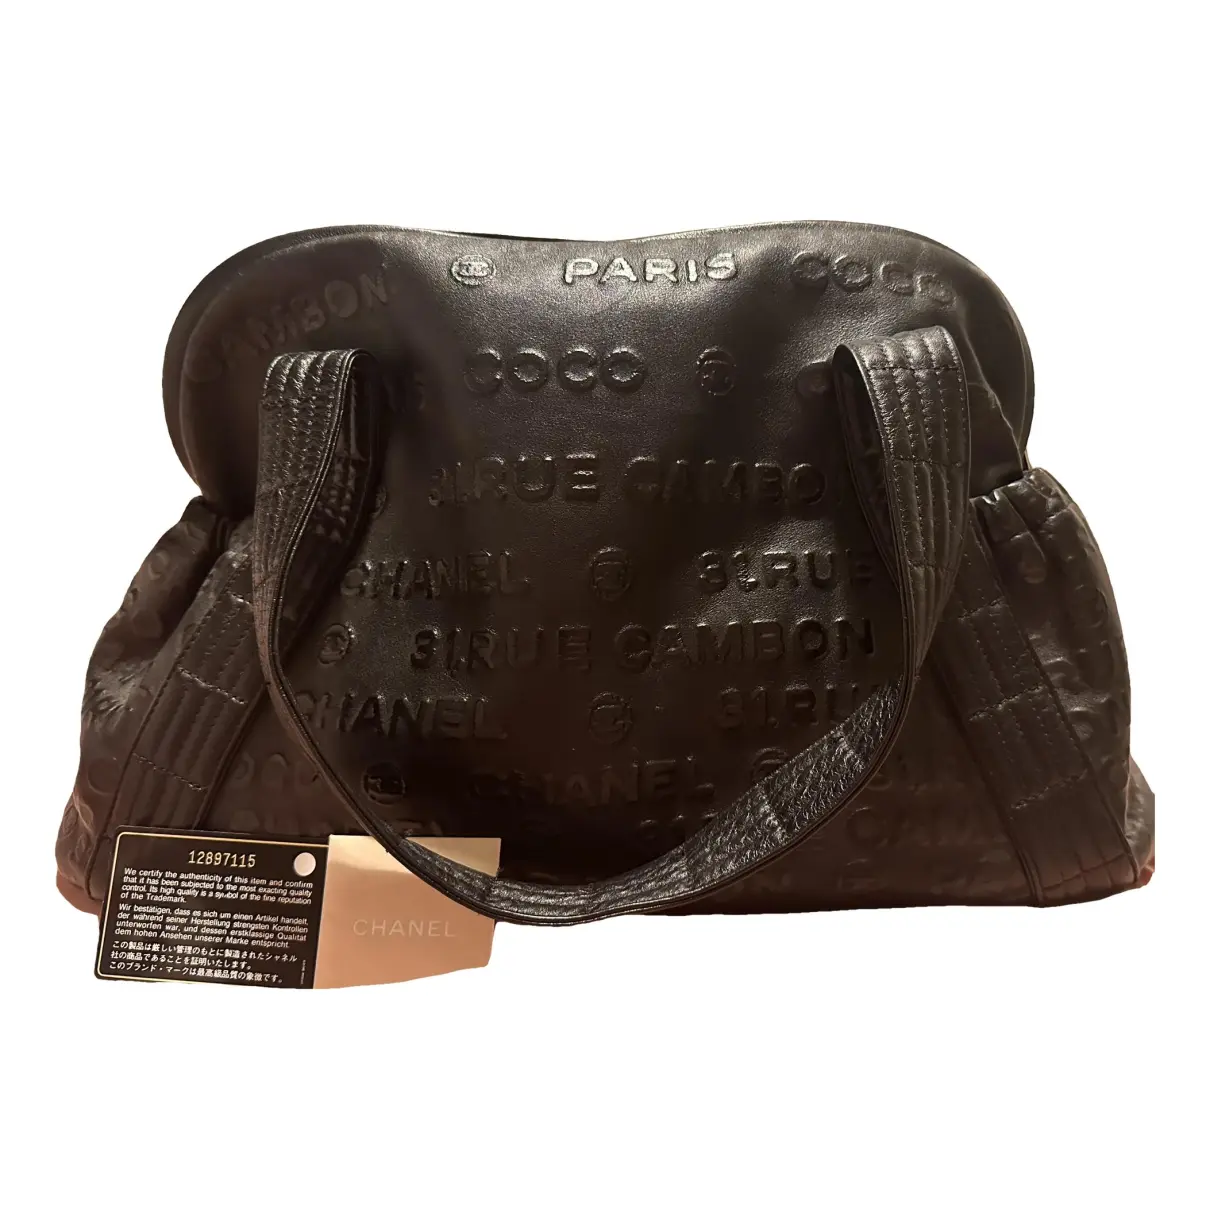 31 Vintage leather tote Chanel - Vintage